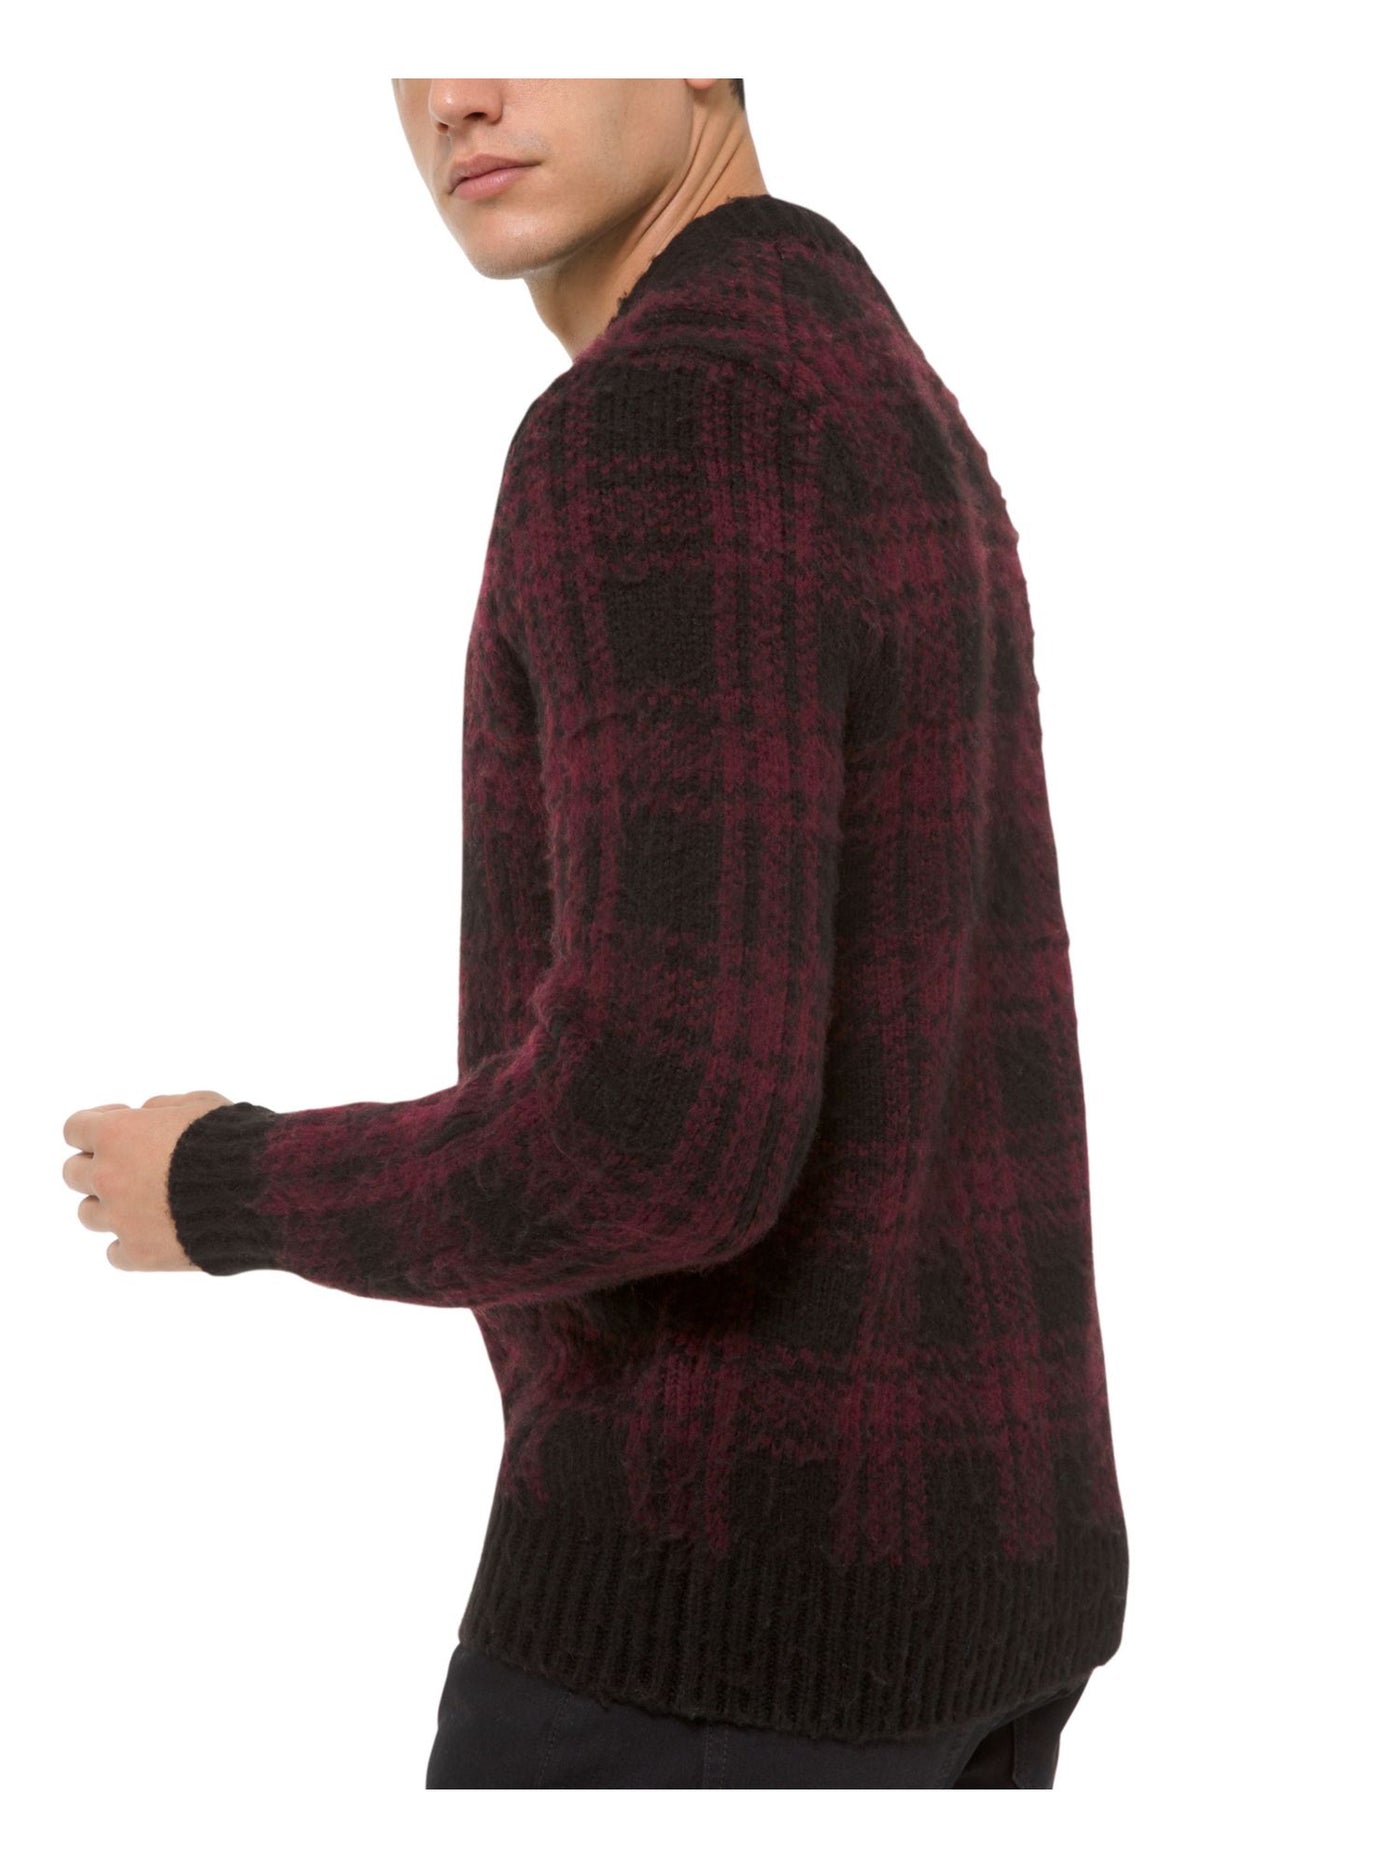 MICHAEL KORS Mens Black Crew Neck Pullover Sweater XXL